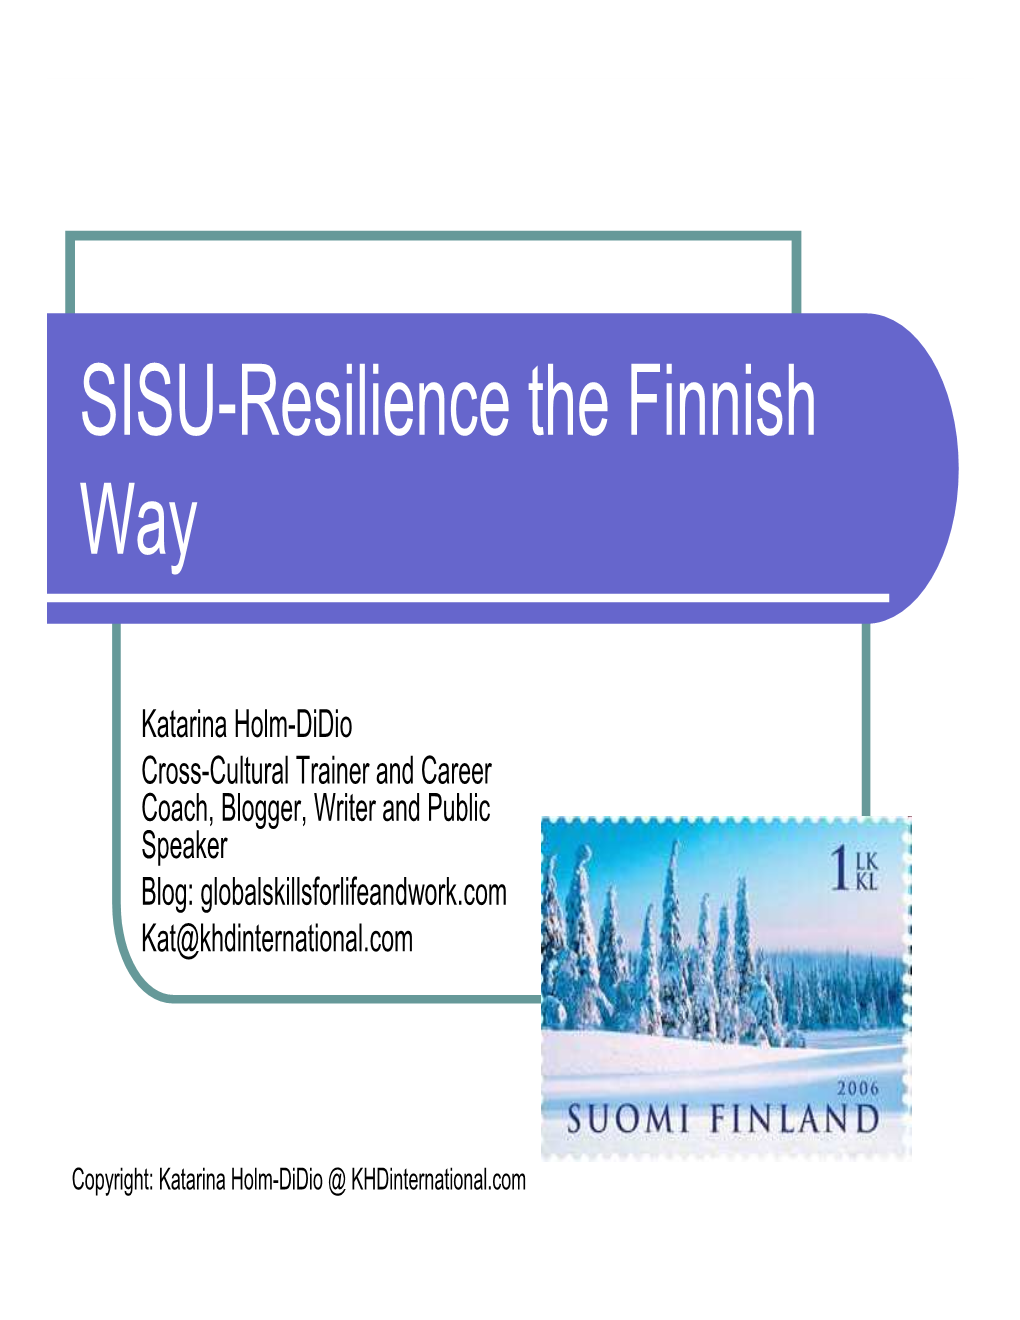 SISU-Resilience the Finnish Way